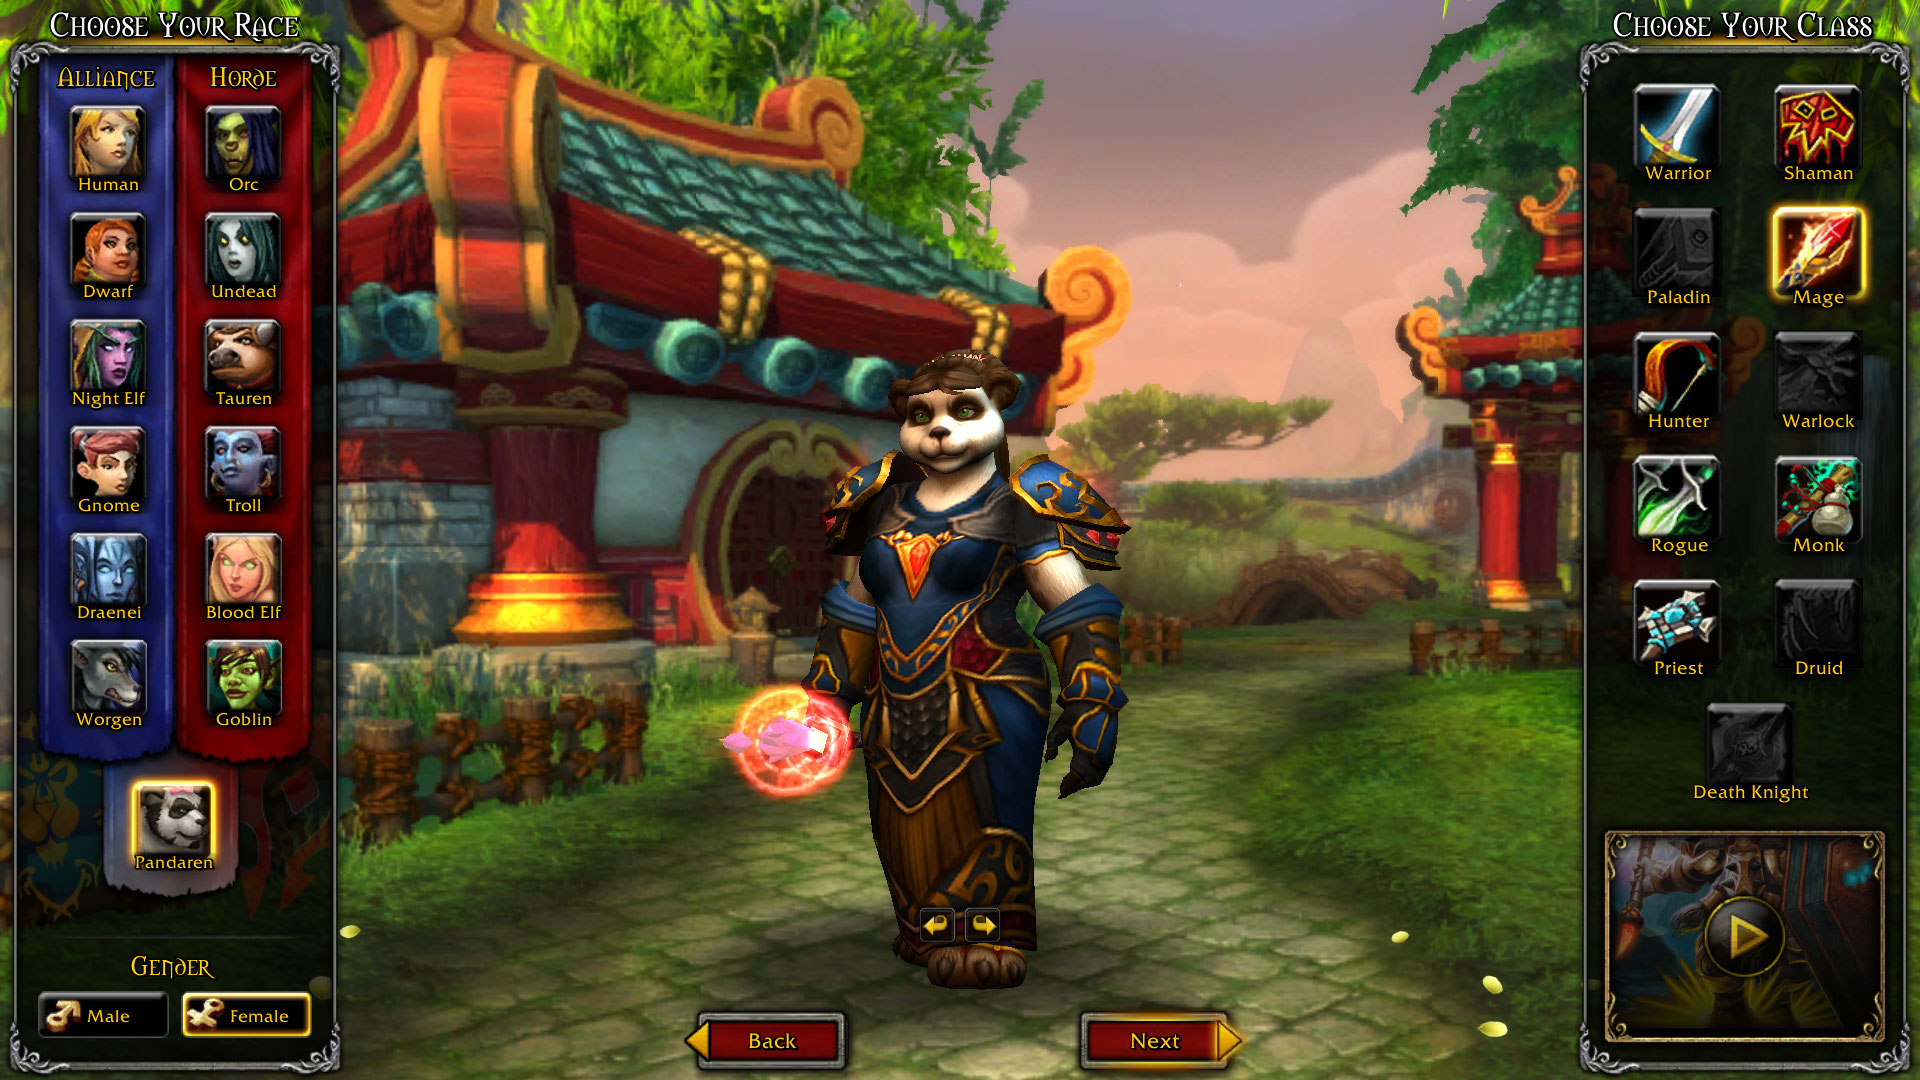 World Of Warcraft Mists Of Pandaria Beta